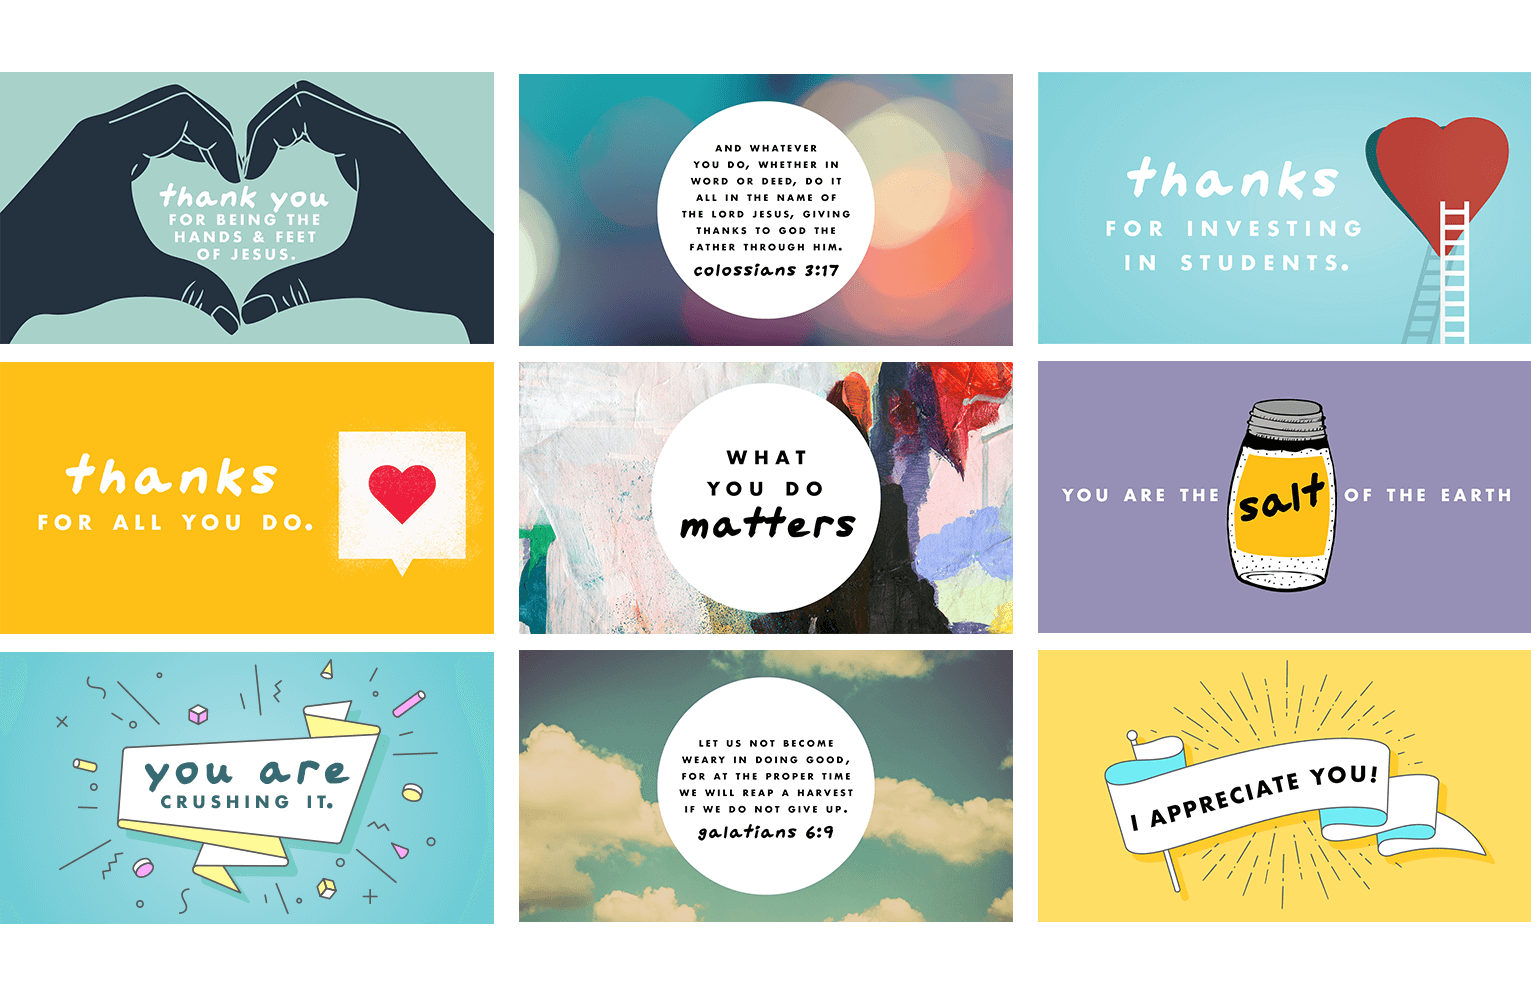 encouragement cards